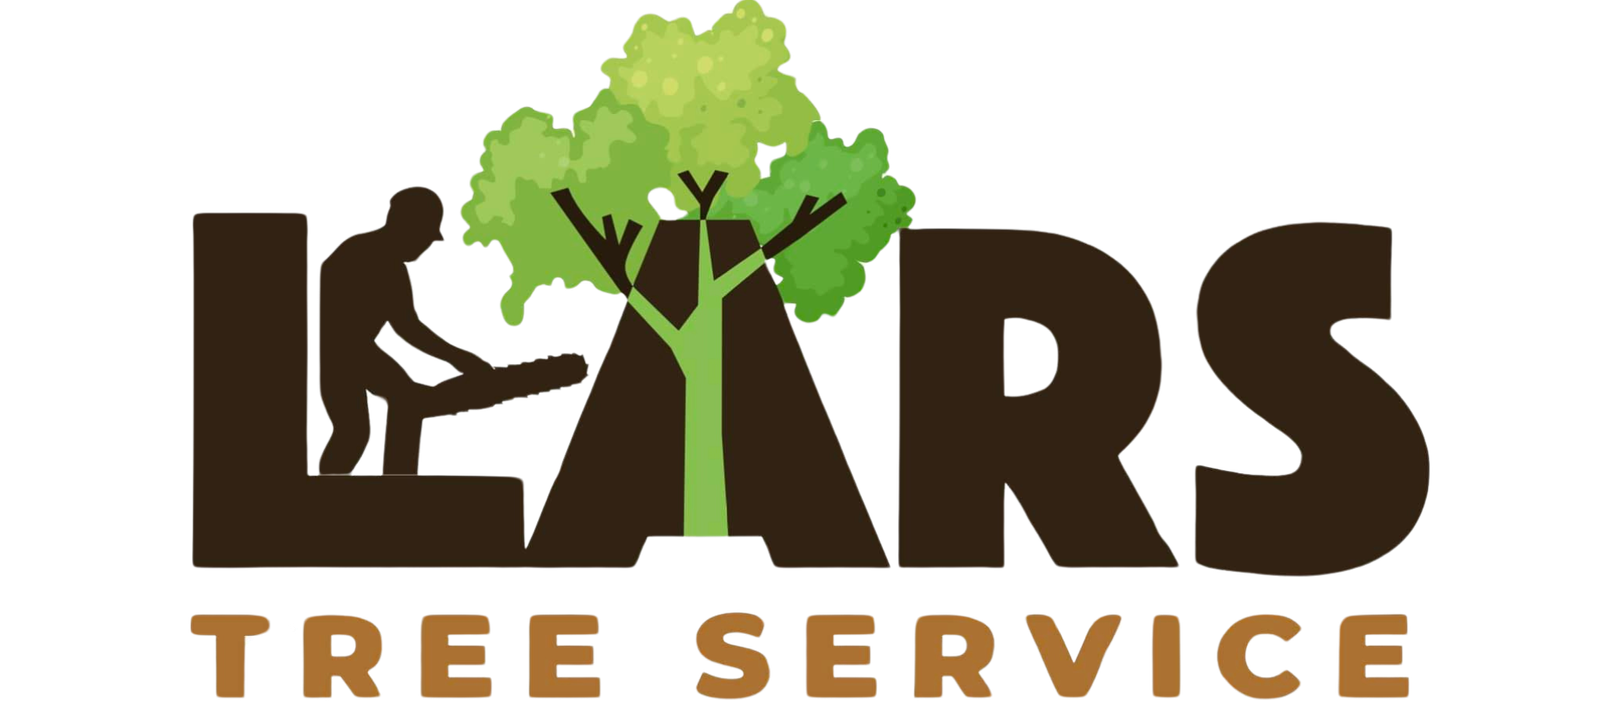 Lars Tree Services Logo